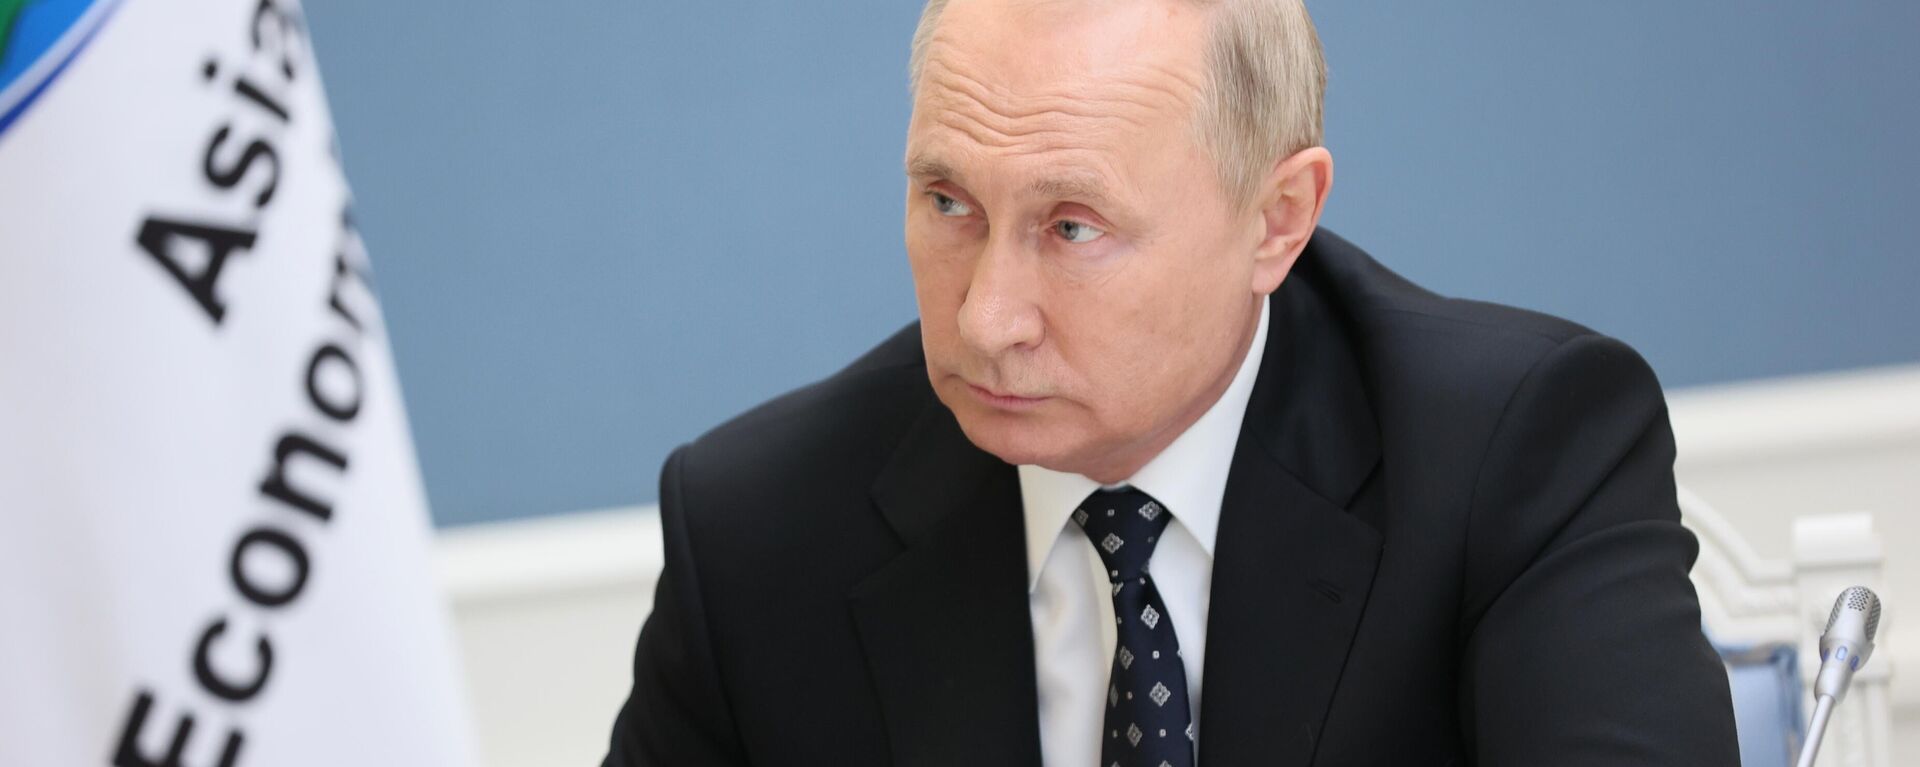 Vladimir Putin, presidente da Rússia, dá entrevista à emissora Rossiya 1 em novembro de 2021 - Sputnik Brasil, 1920, 14.11.2021